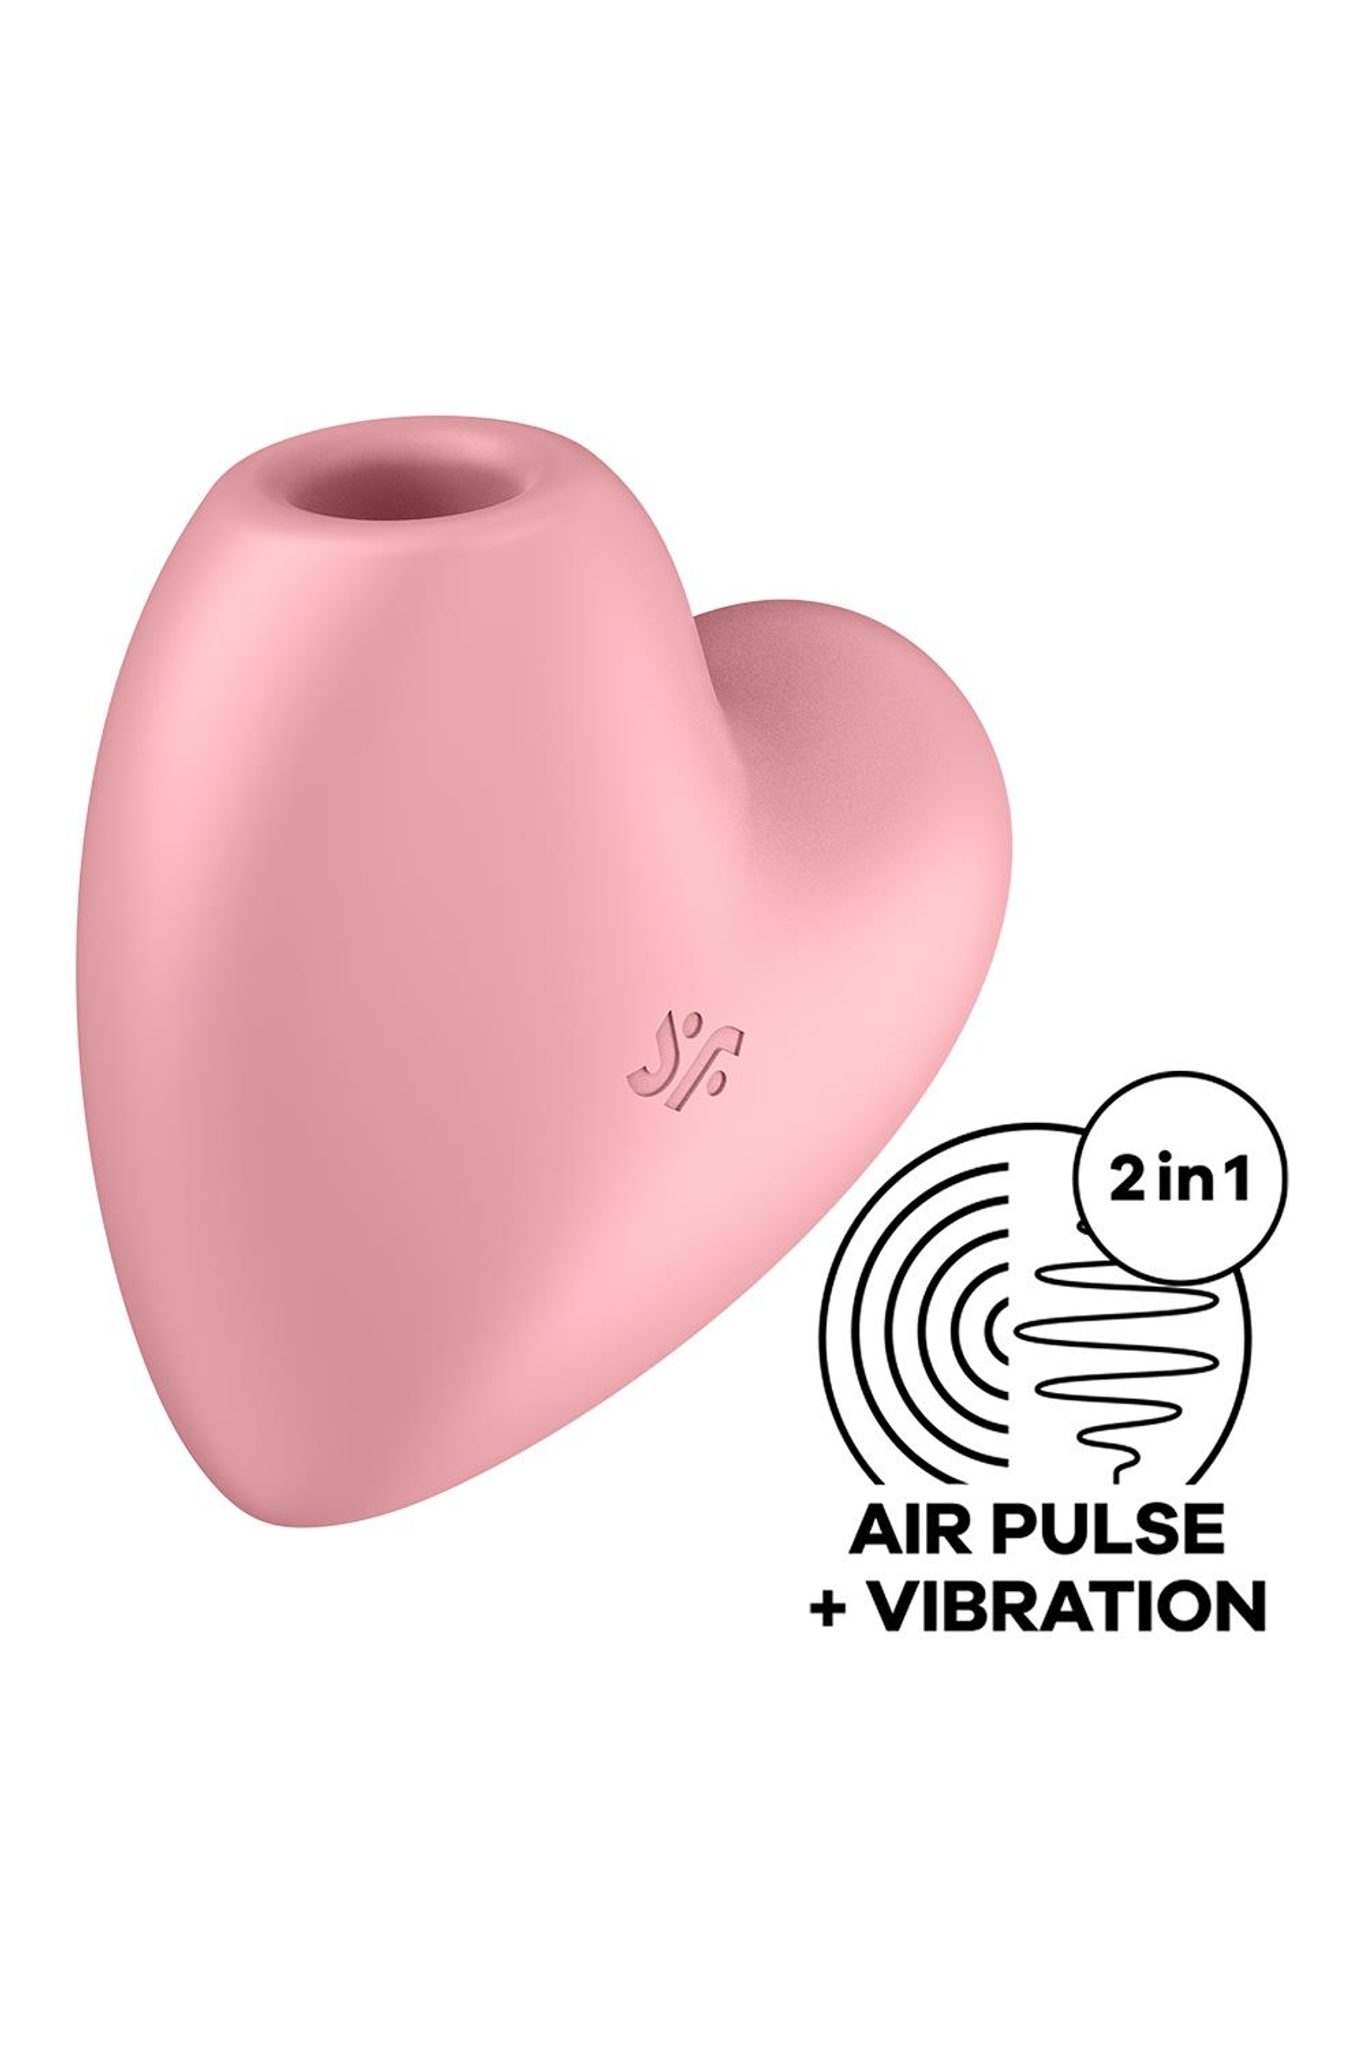 SATISFYER Stimulátor klitorisu CUTIE HEART růžový